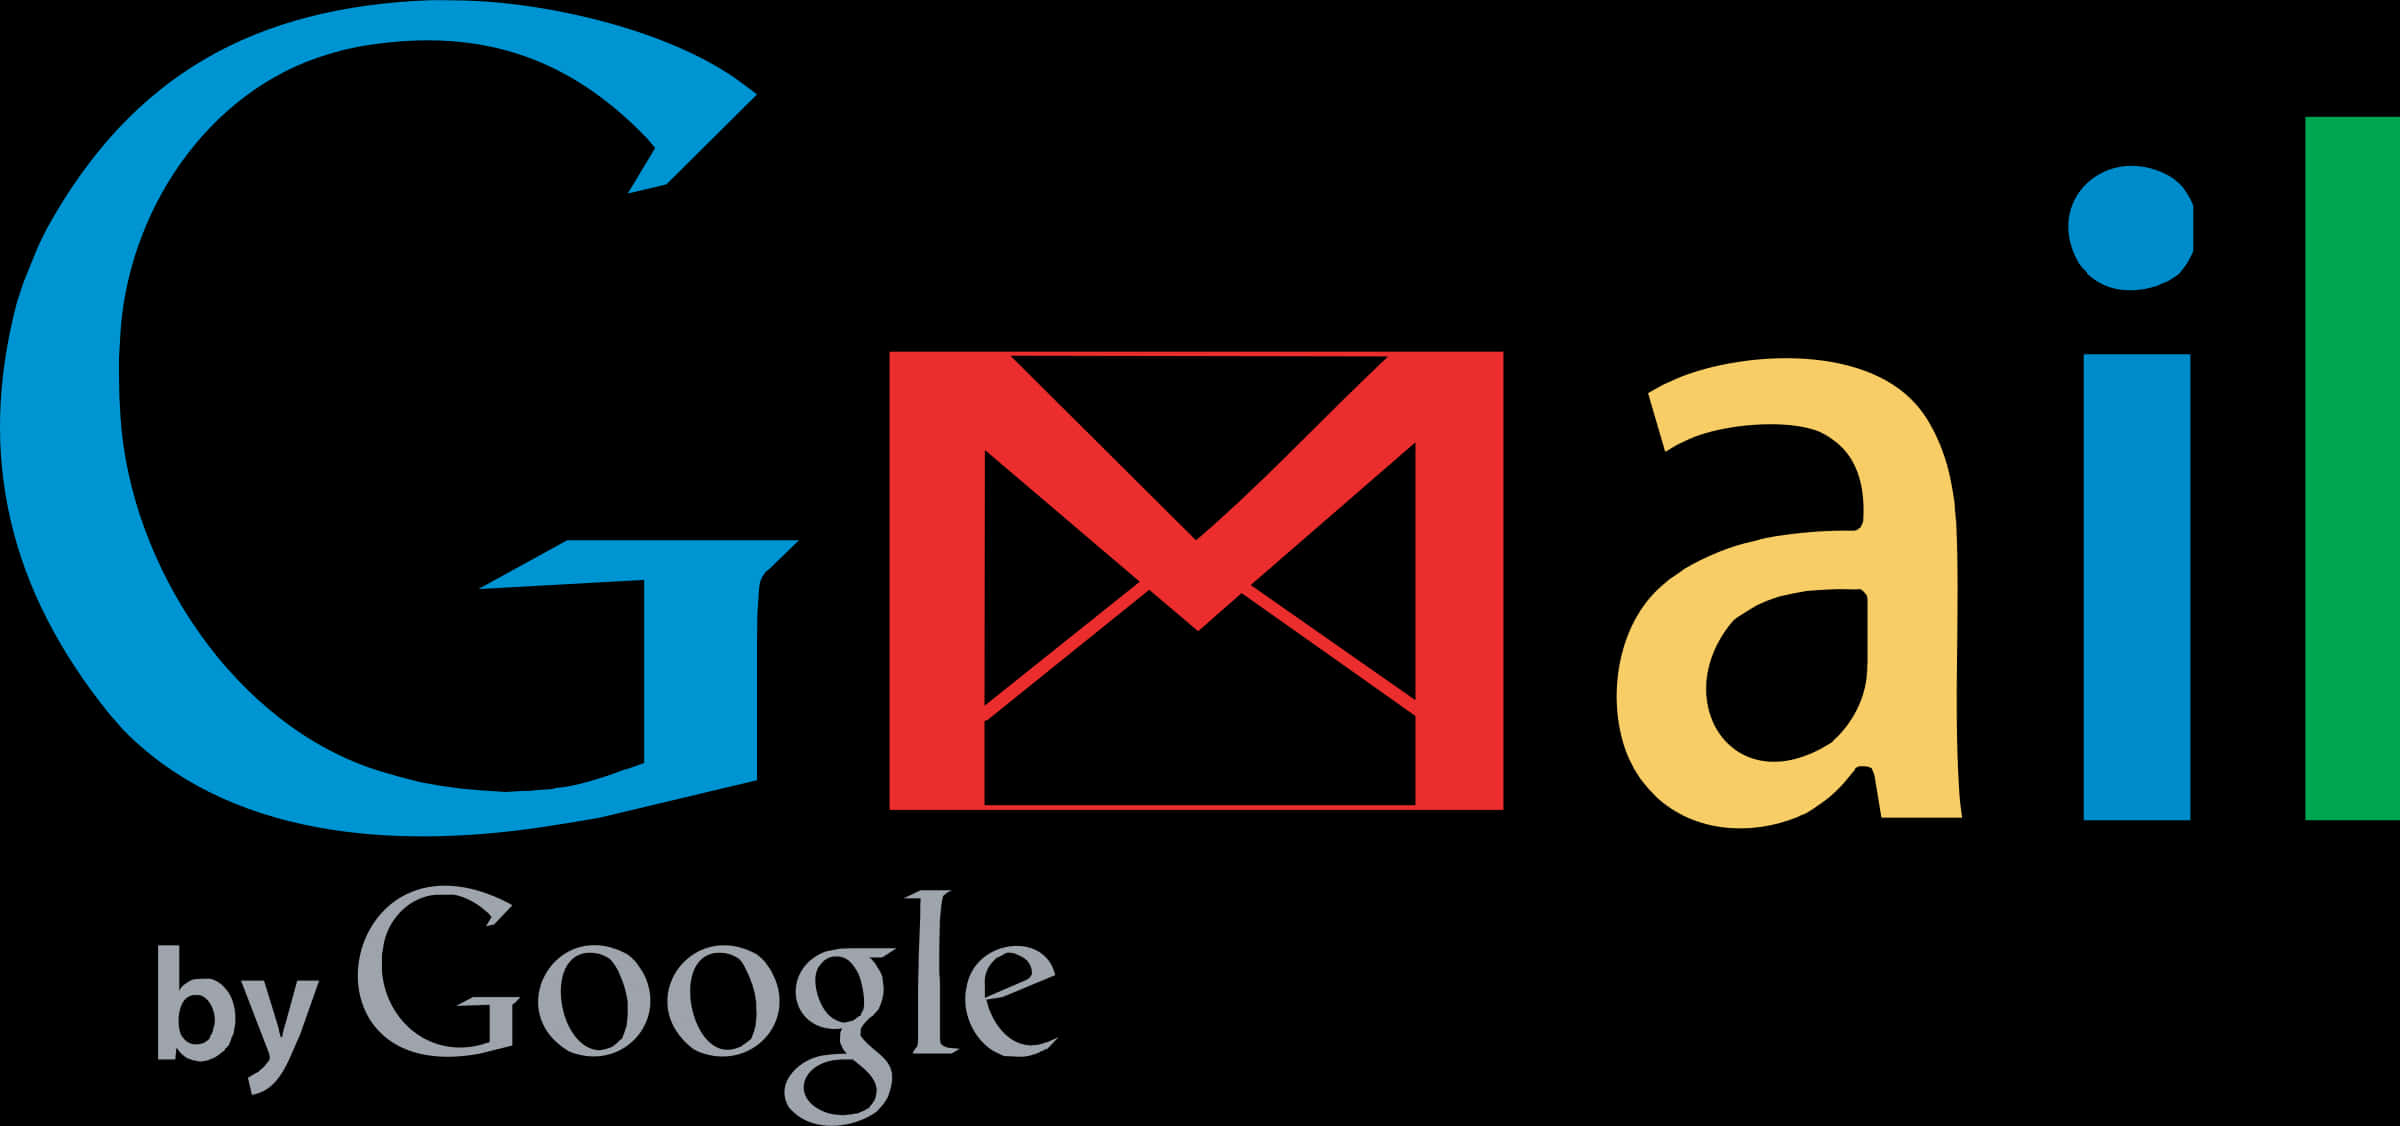 A Logo Of Google And Google